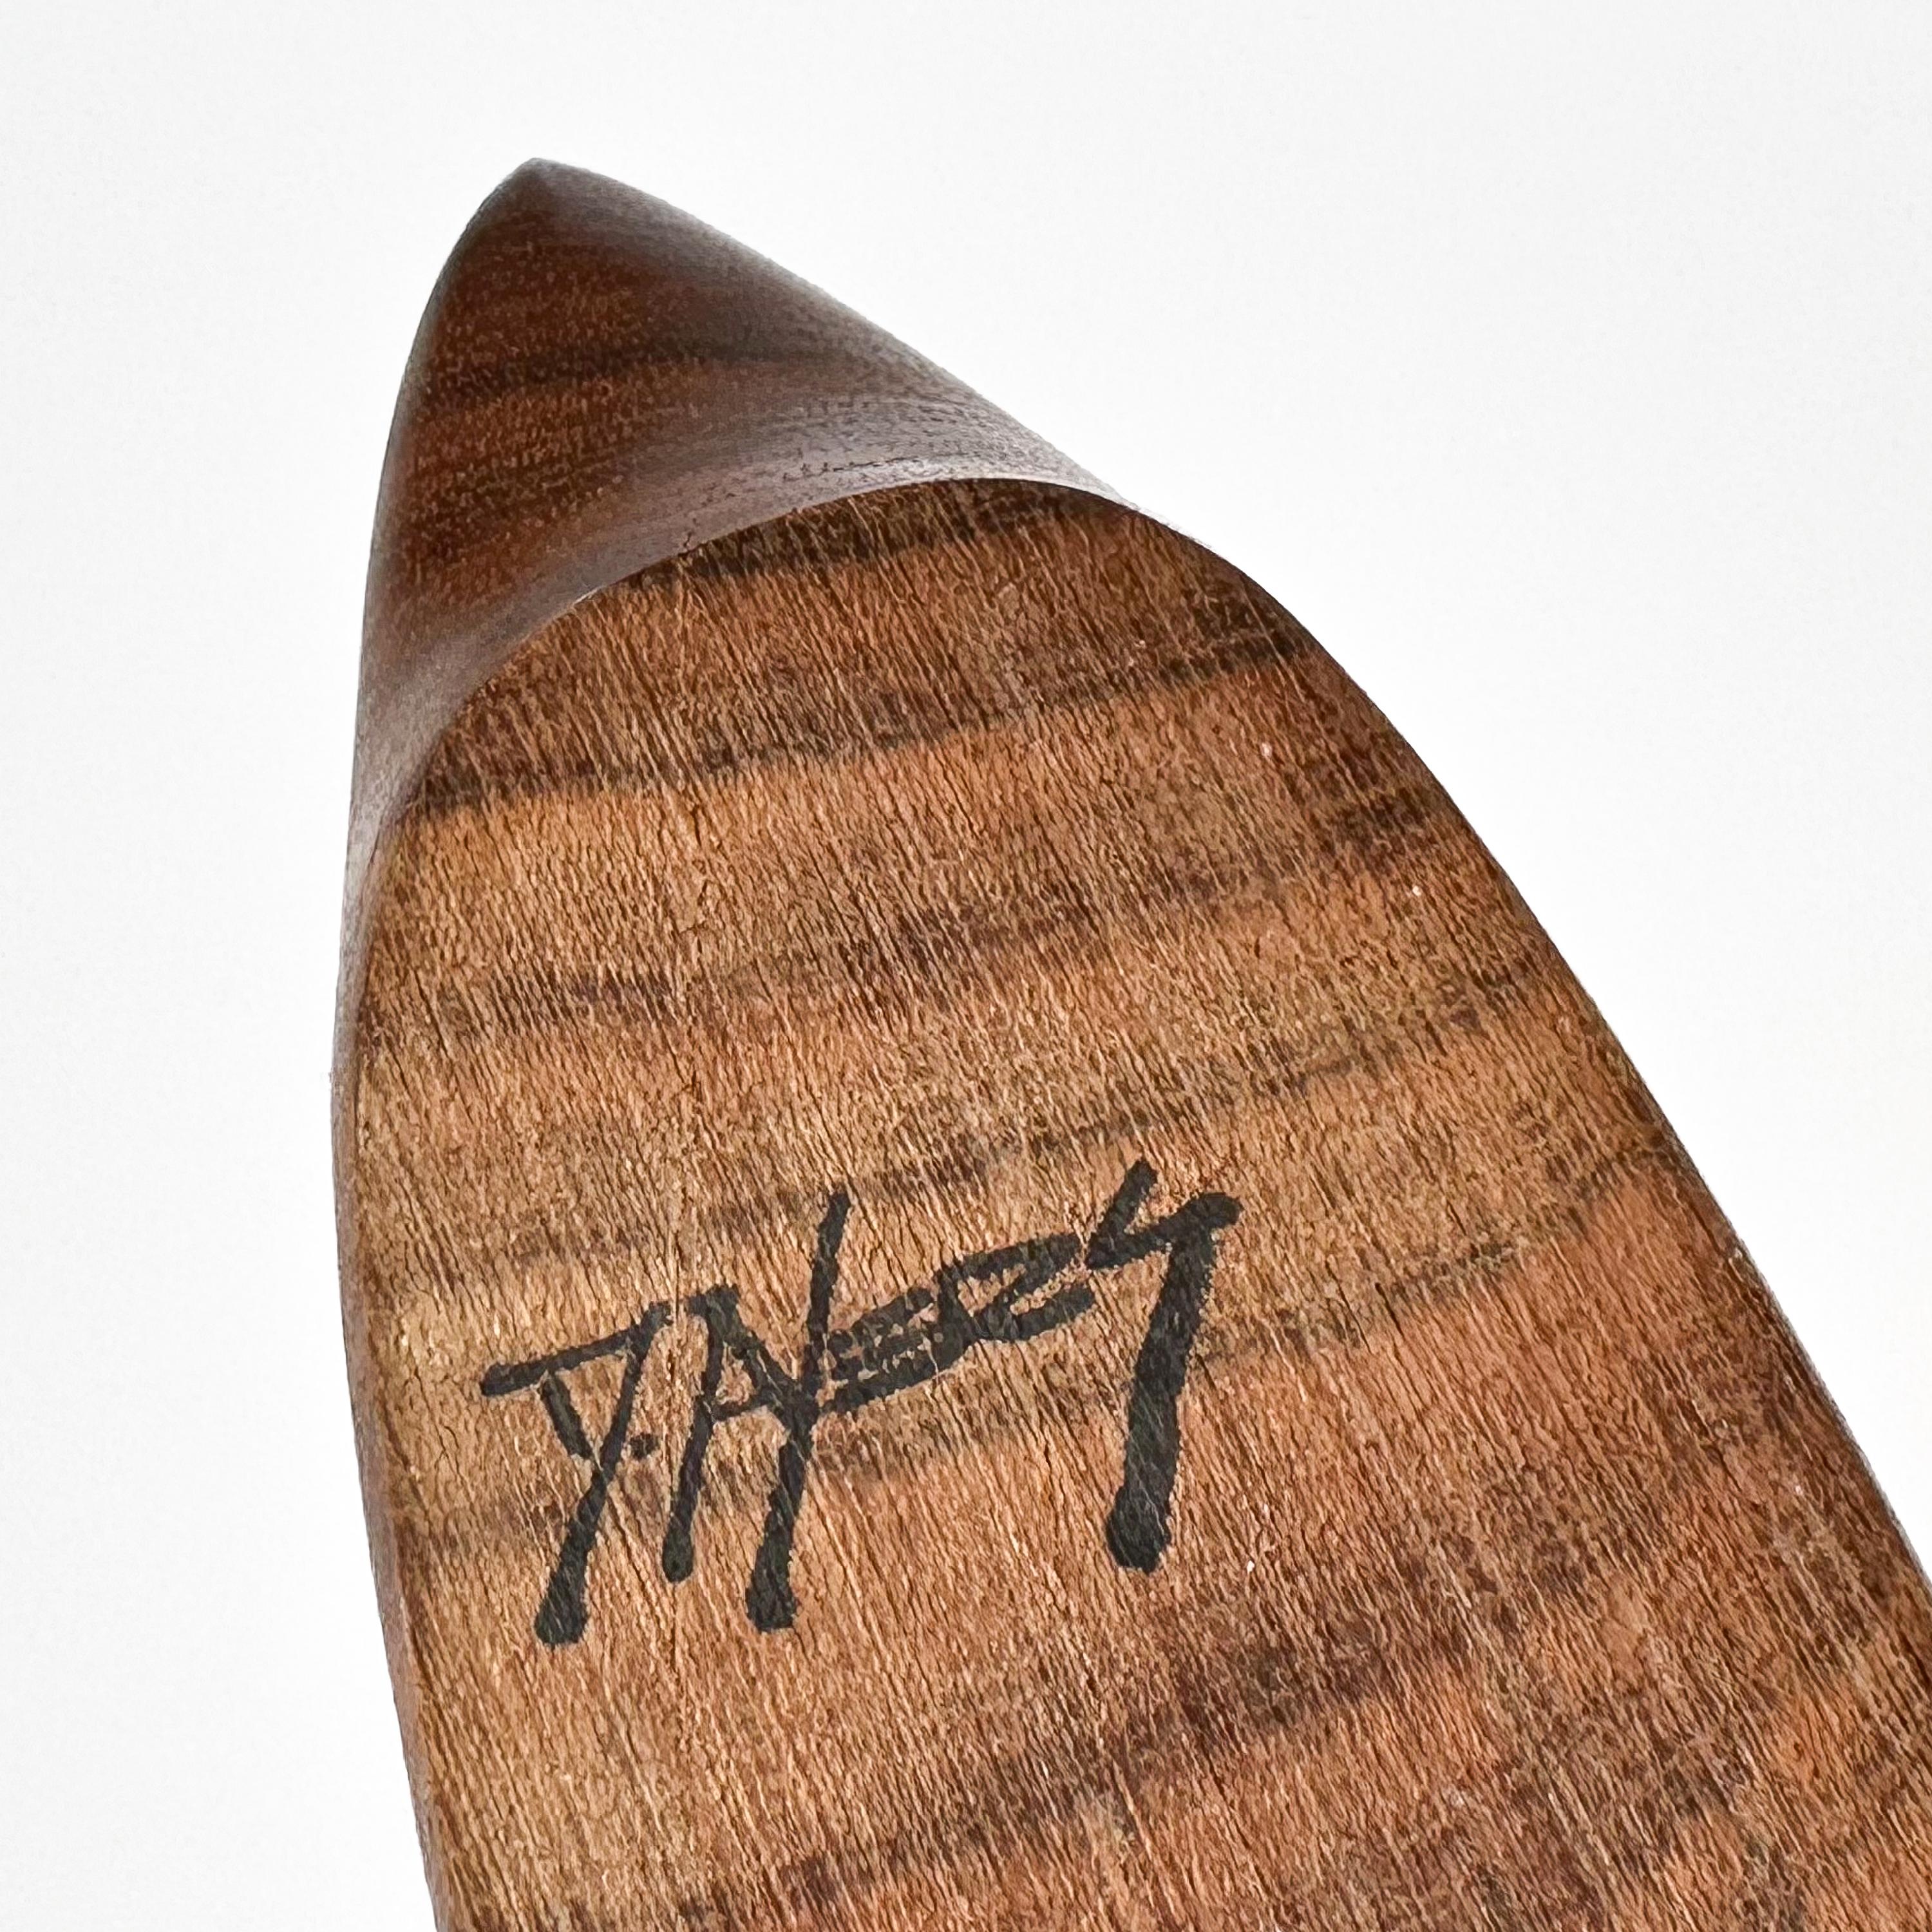 Doug Ayers Signed Carved / Turned Wood Weed Vase 5